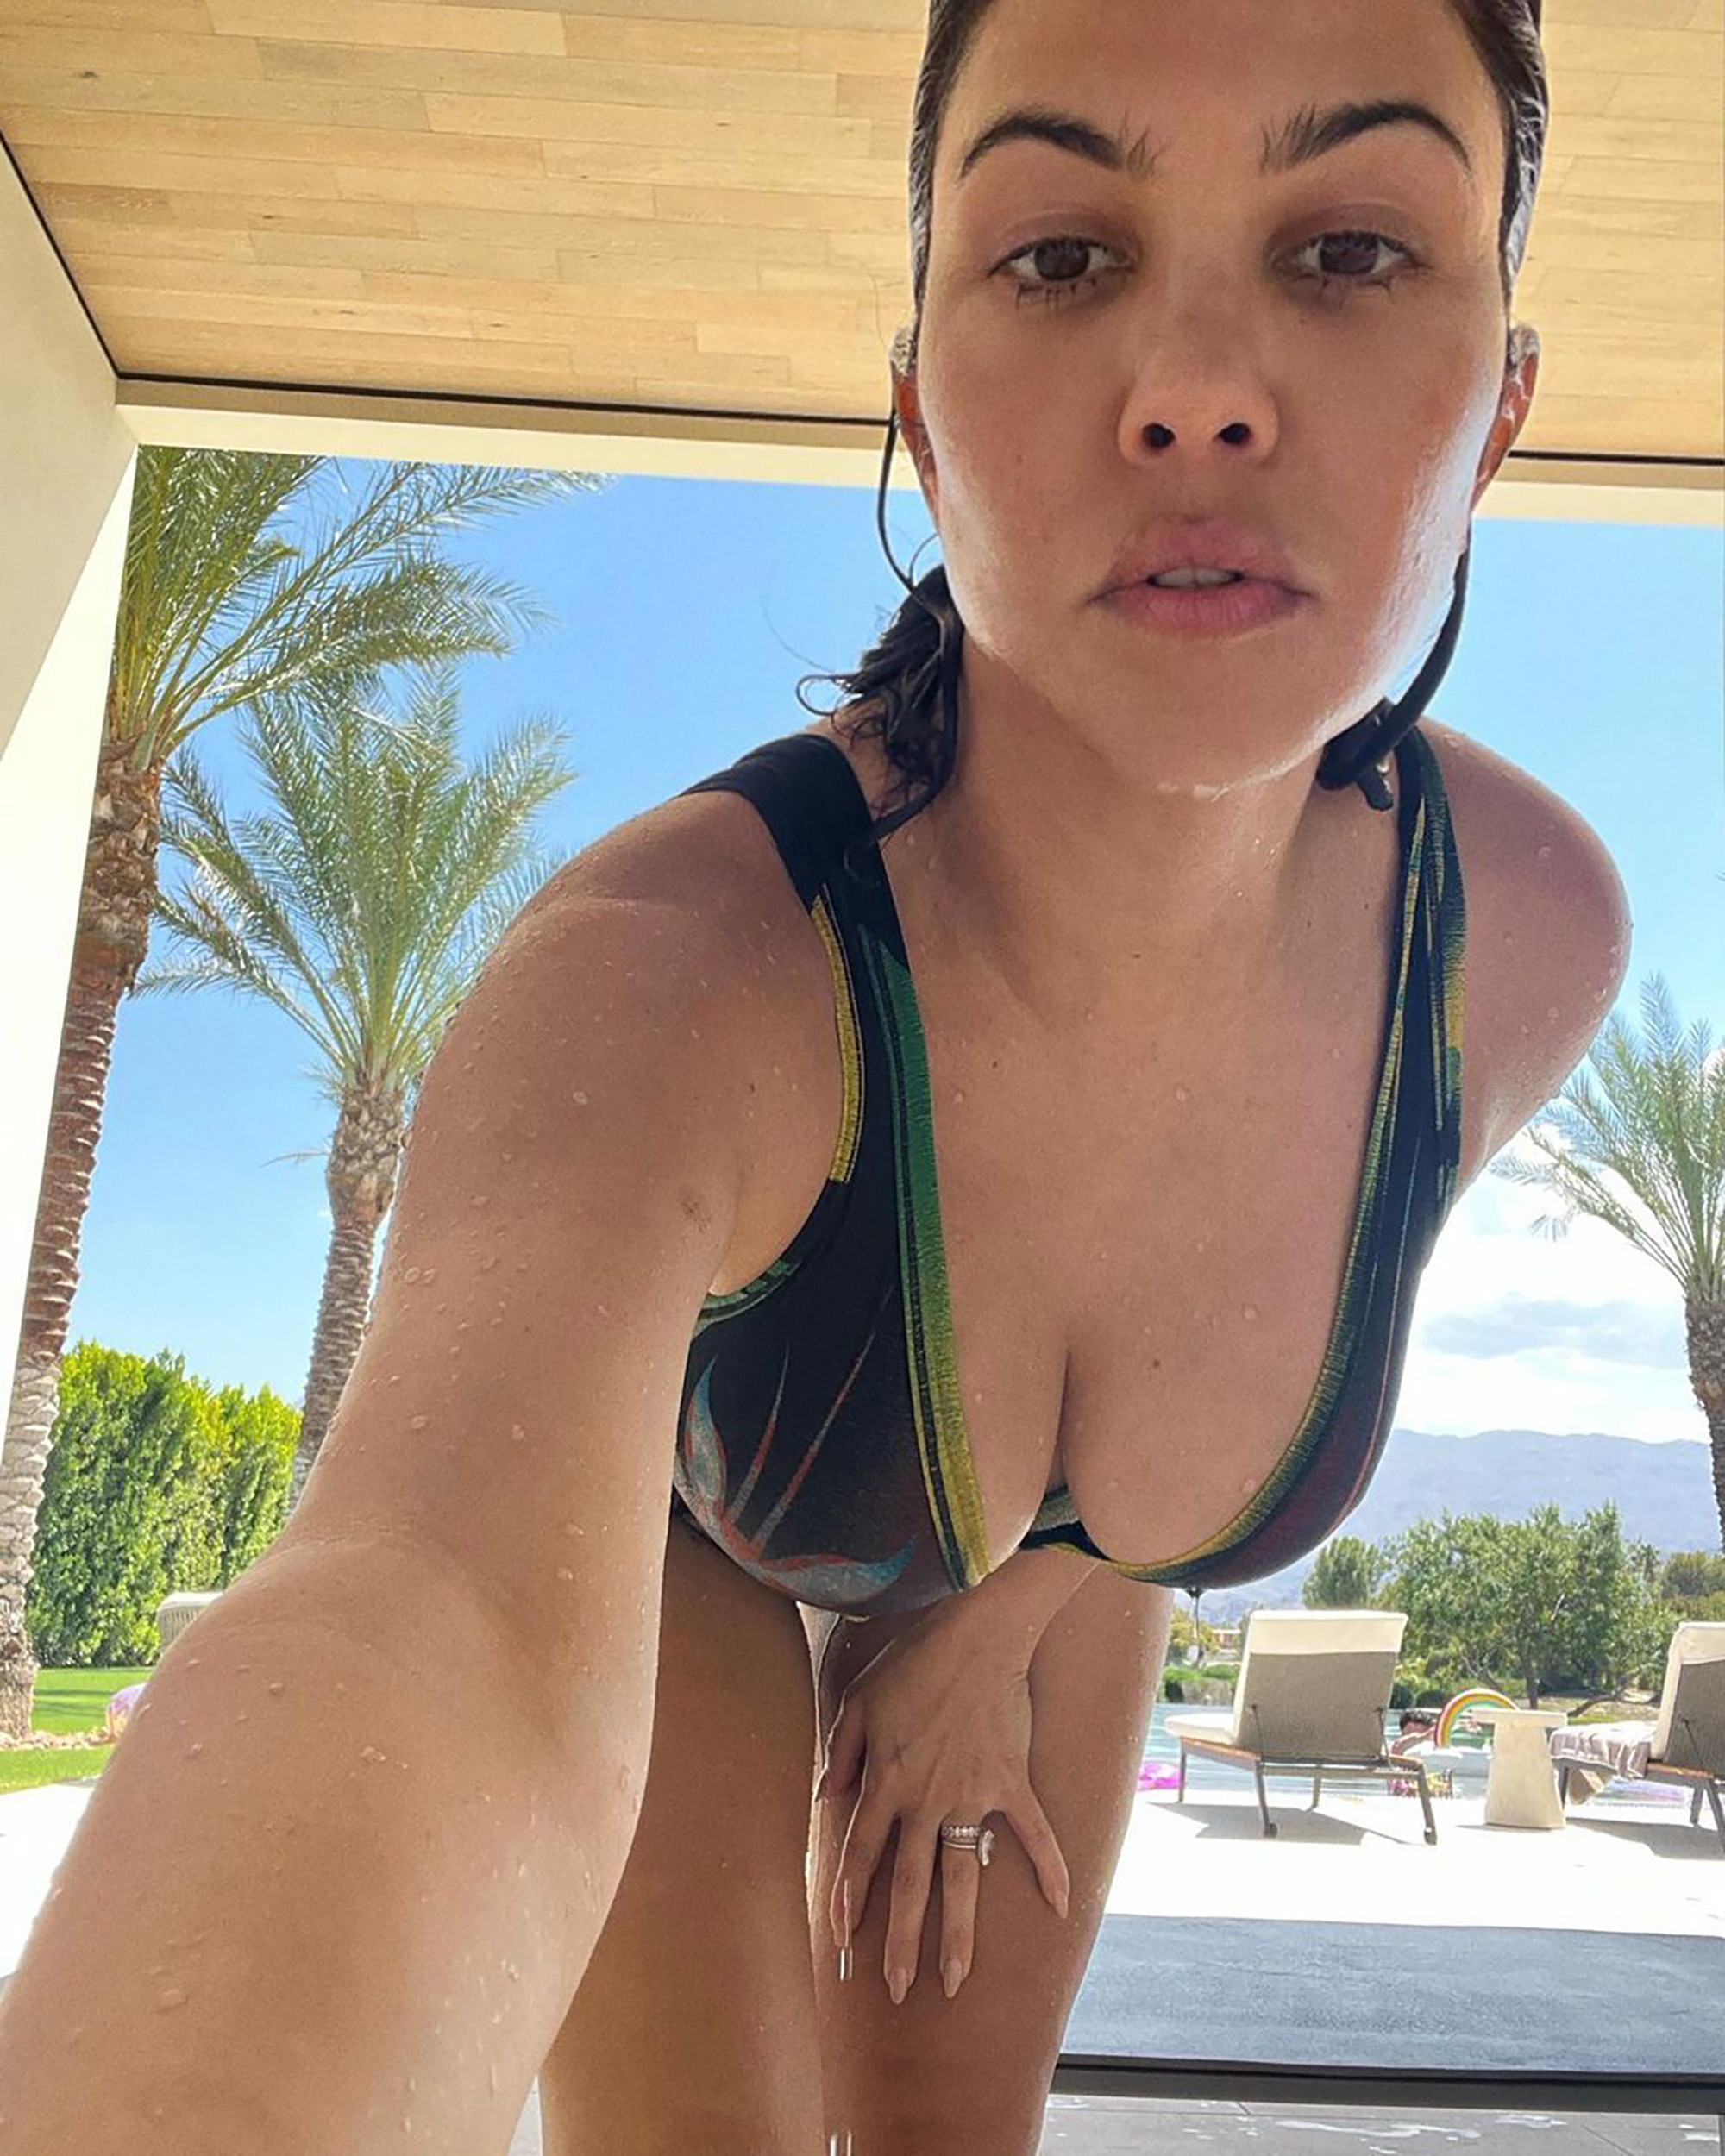 Kourtney Kardashian leans into vacation with a racy selfie.